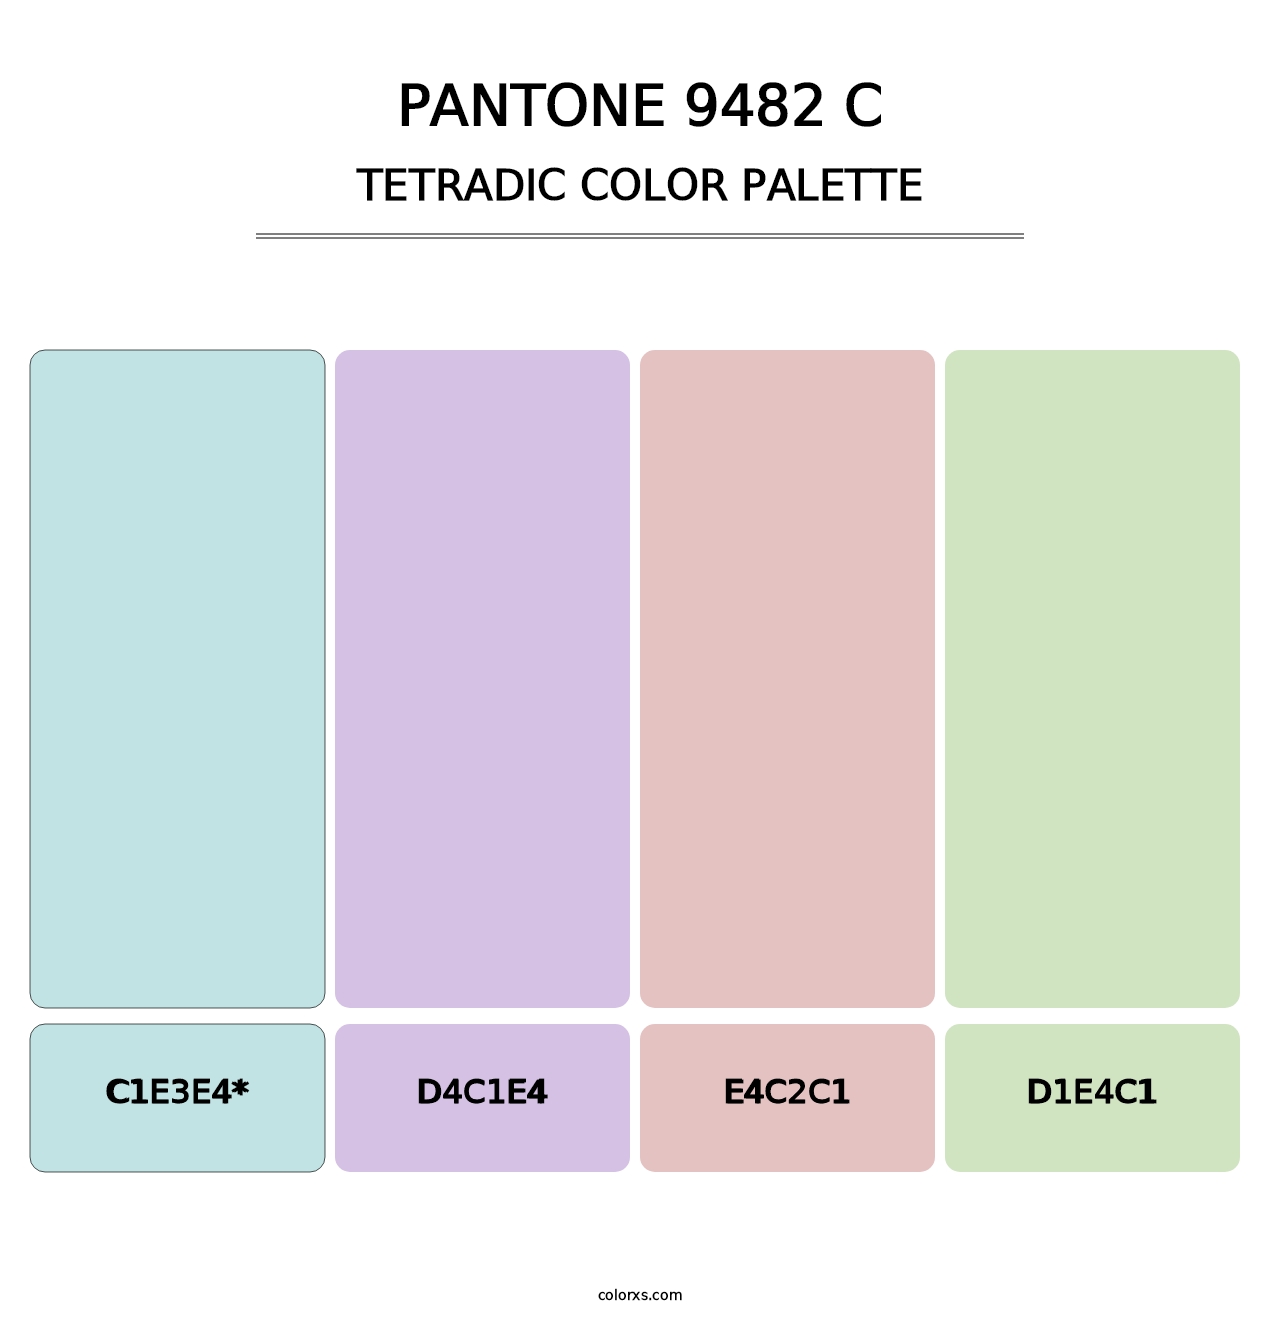 PANTONE 9482 C - Tetradic Color Palette